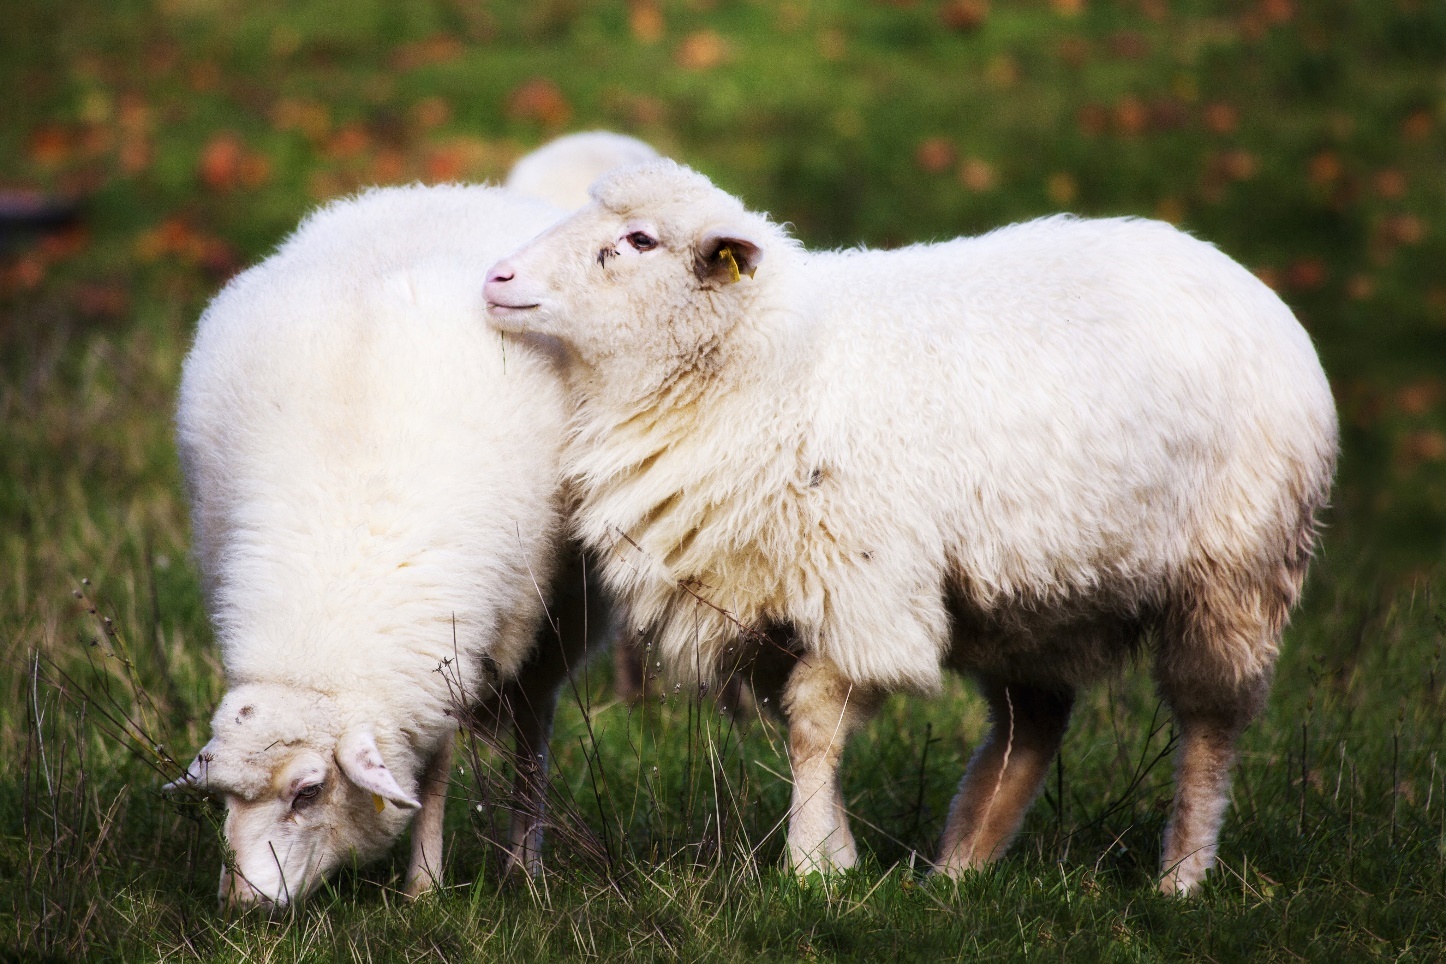 46bh75jun76u76 قیمت گوسفند زنده در تهران و کرج